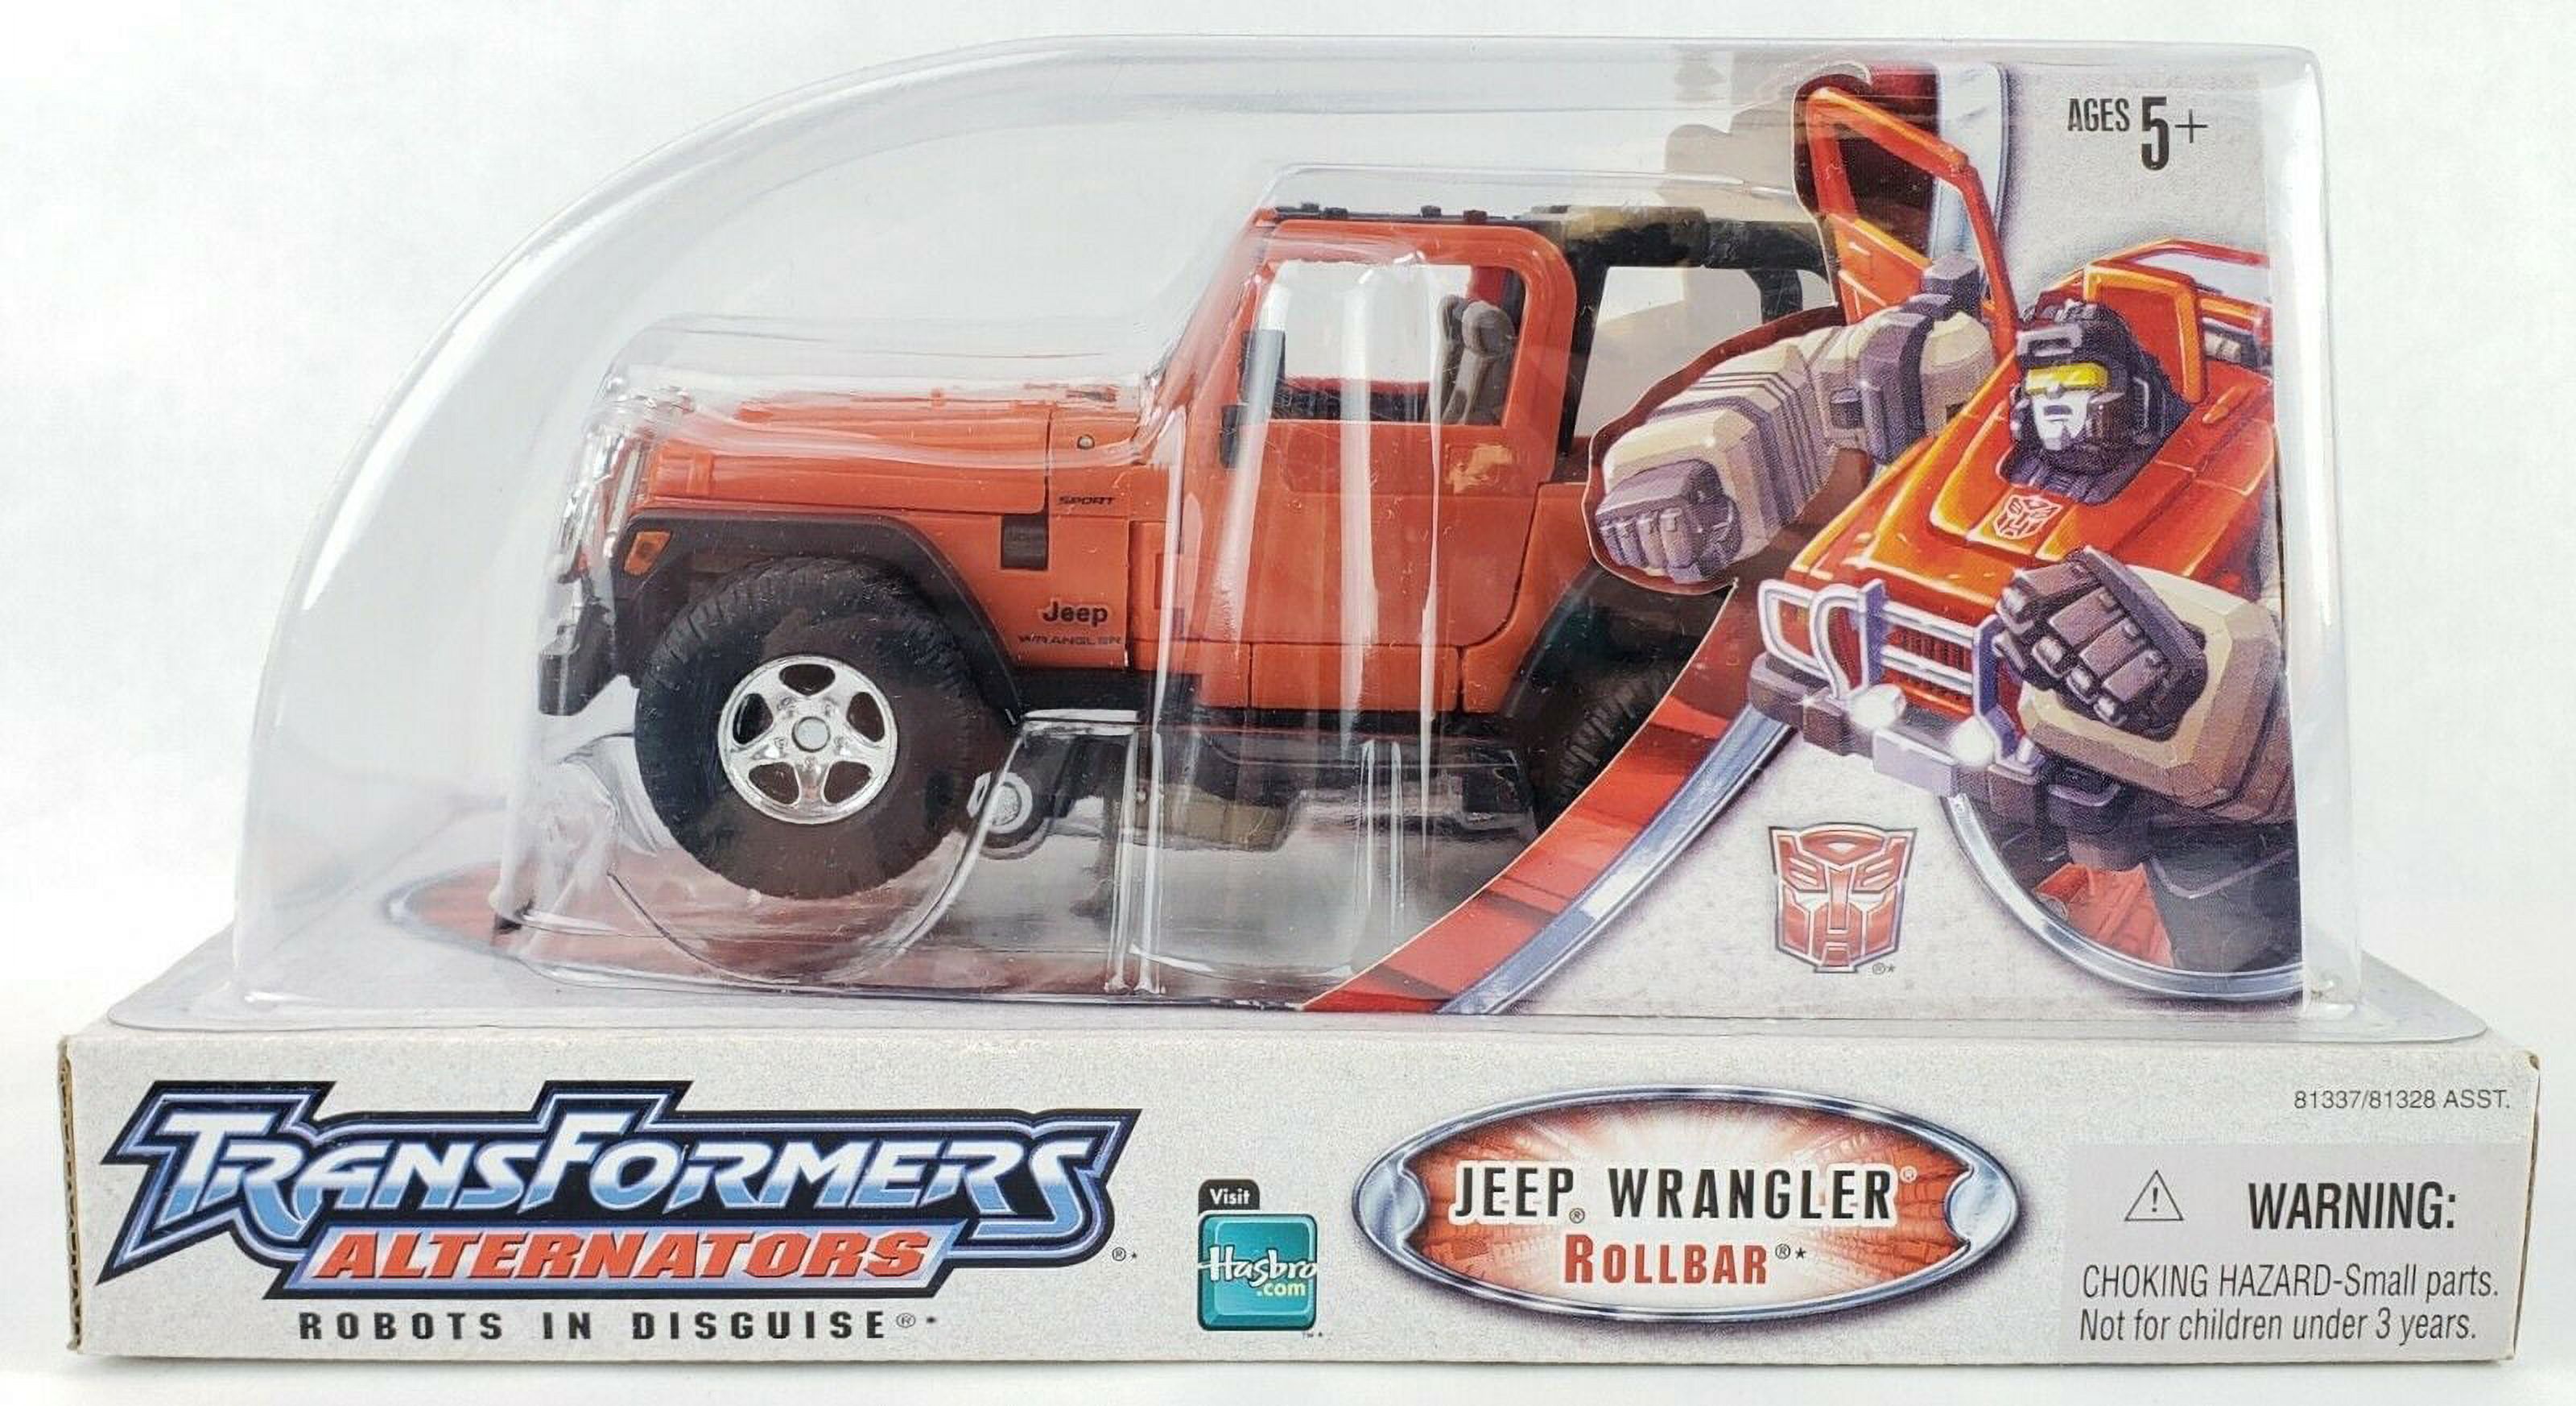 Transformers Alternators: Jeep Wrangler, Rollbar - image 2 of 5